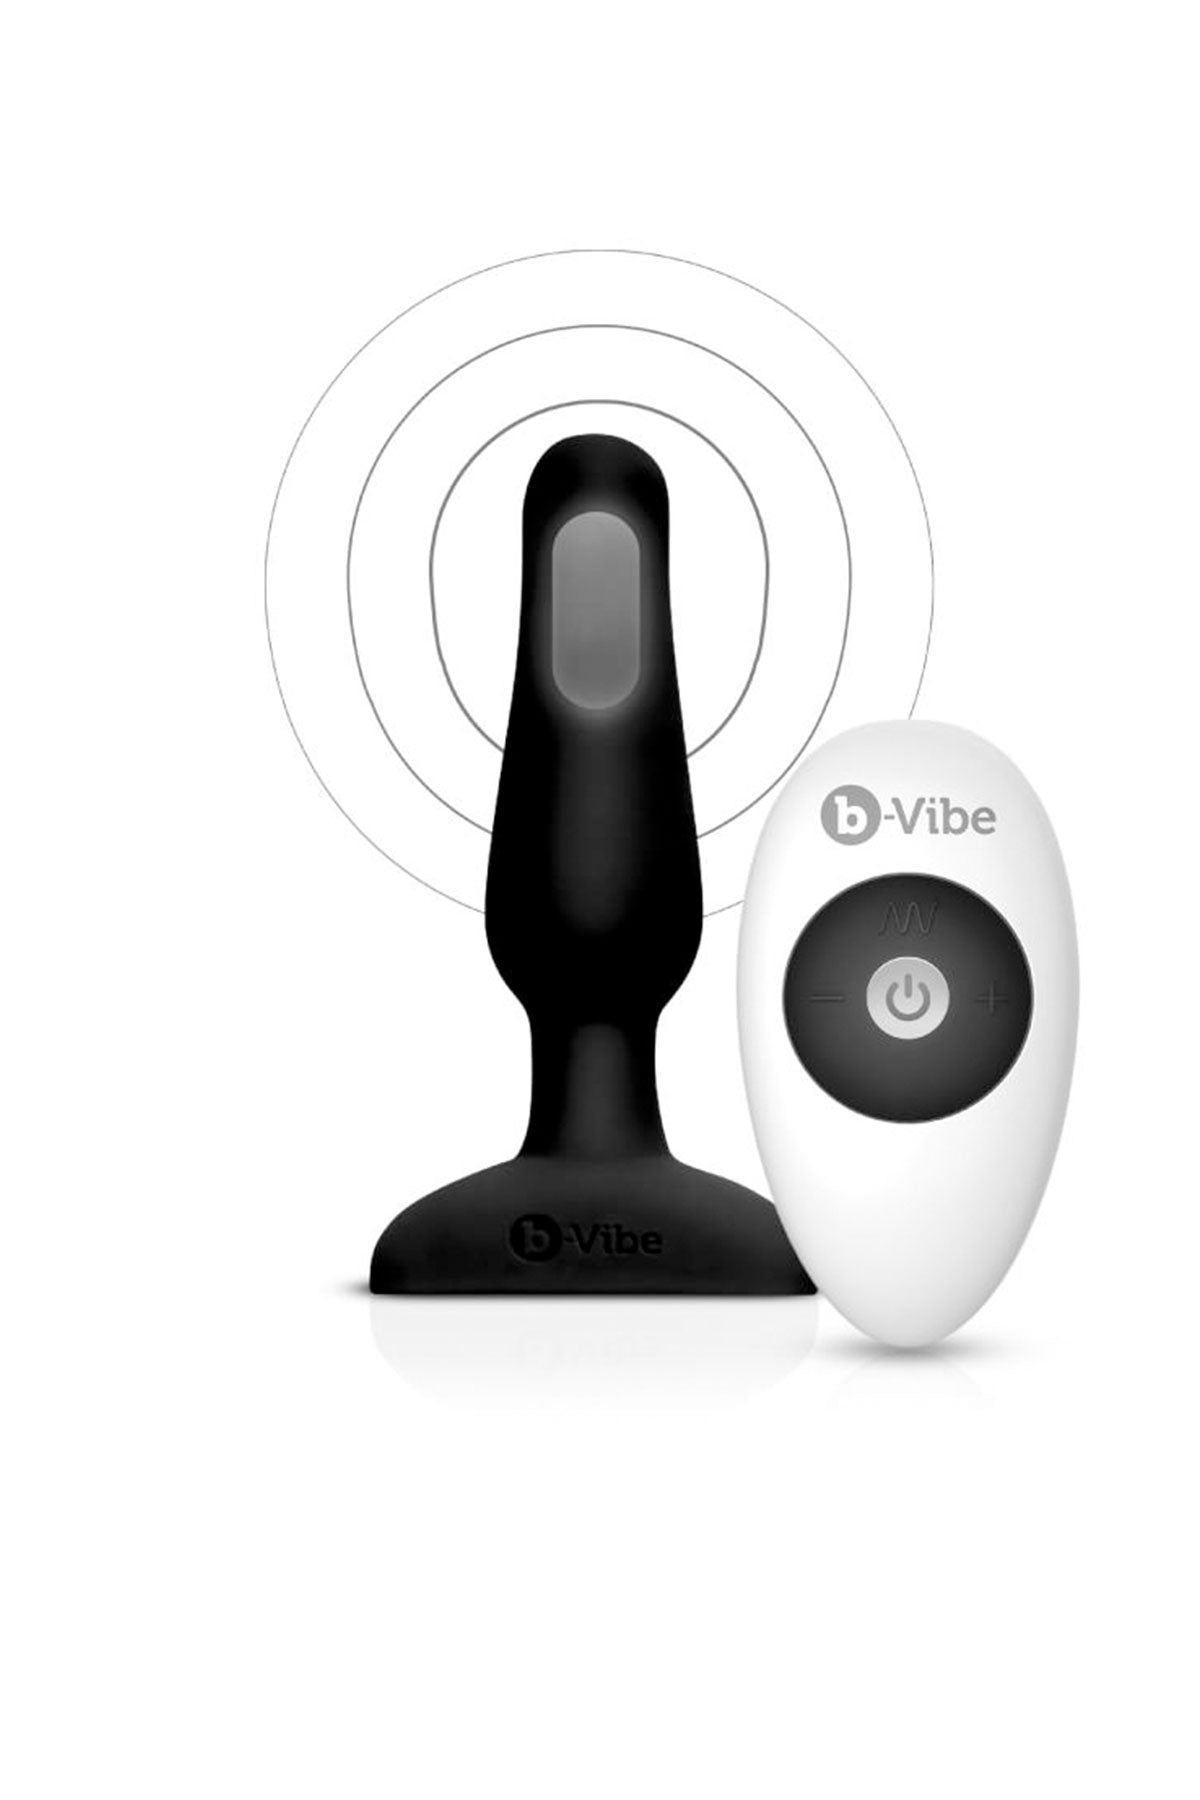 Remote Novice Vibrating Butt Plug by B-Vibe